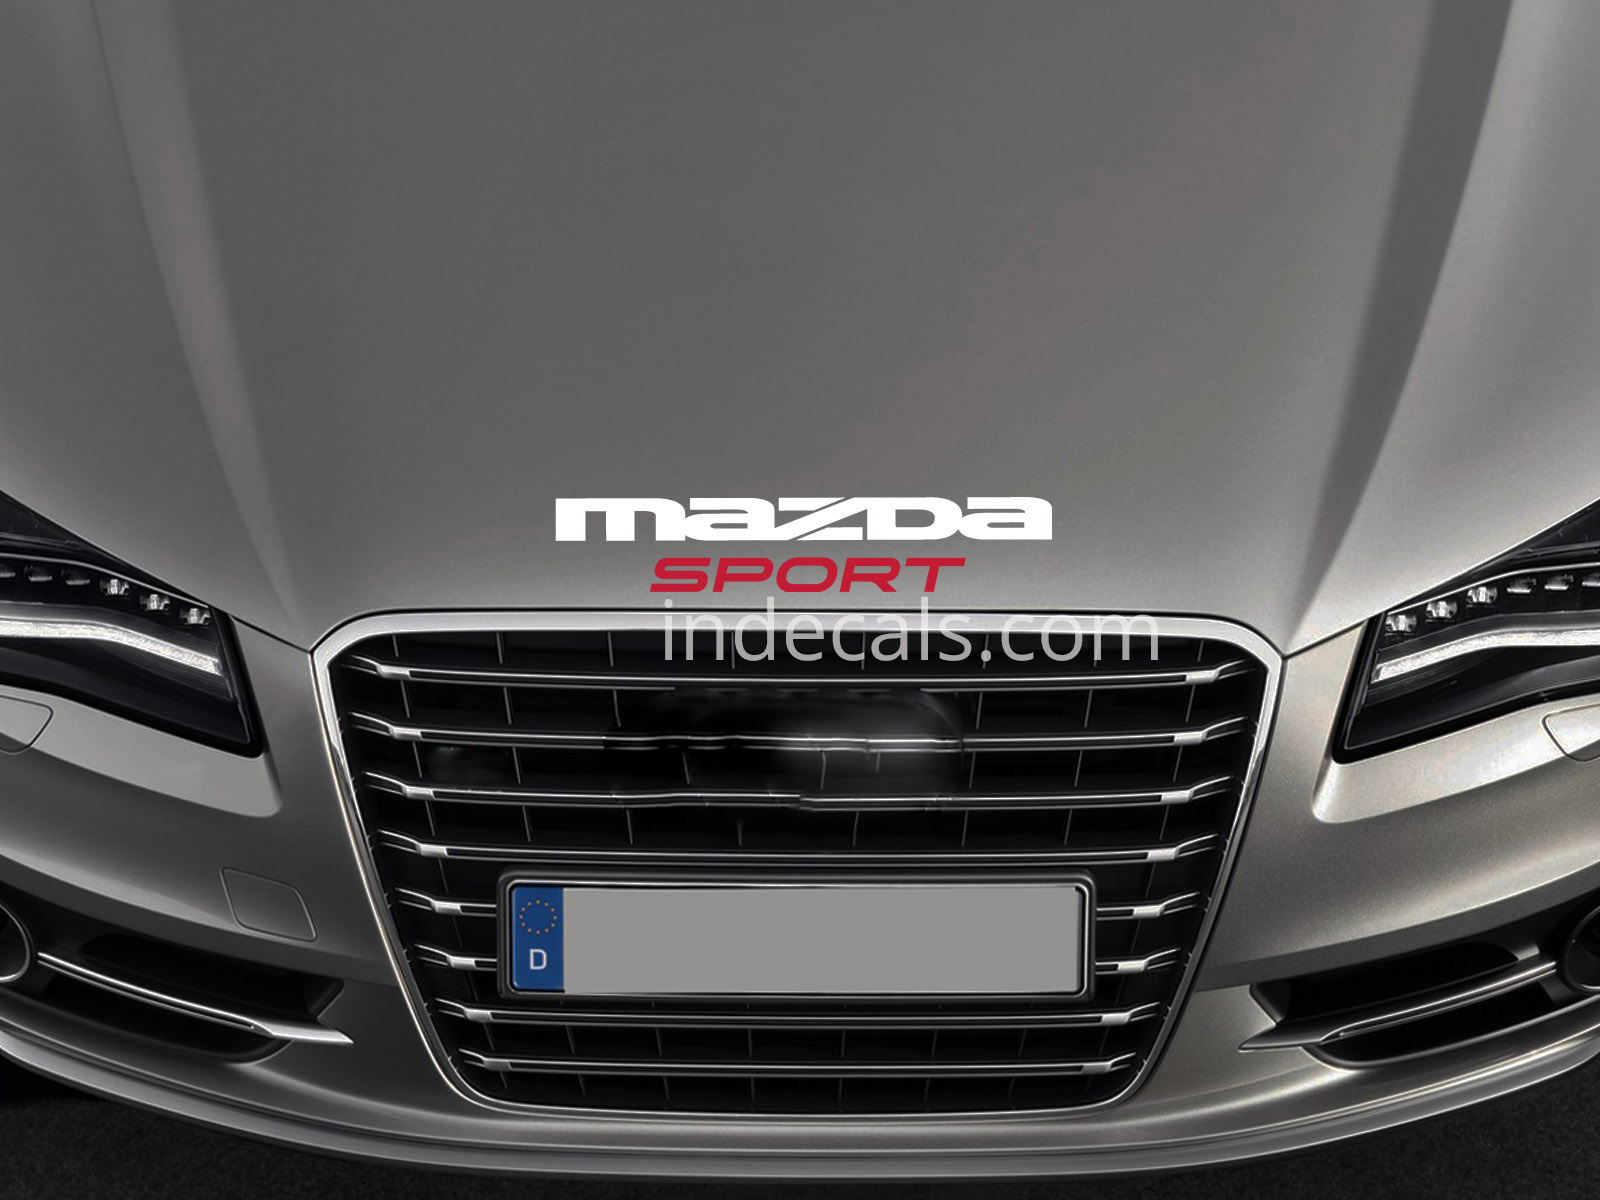 1 x Mazda Sport Sticker for Bonnet - White & Red